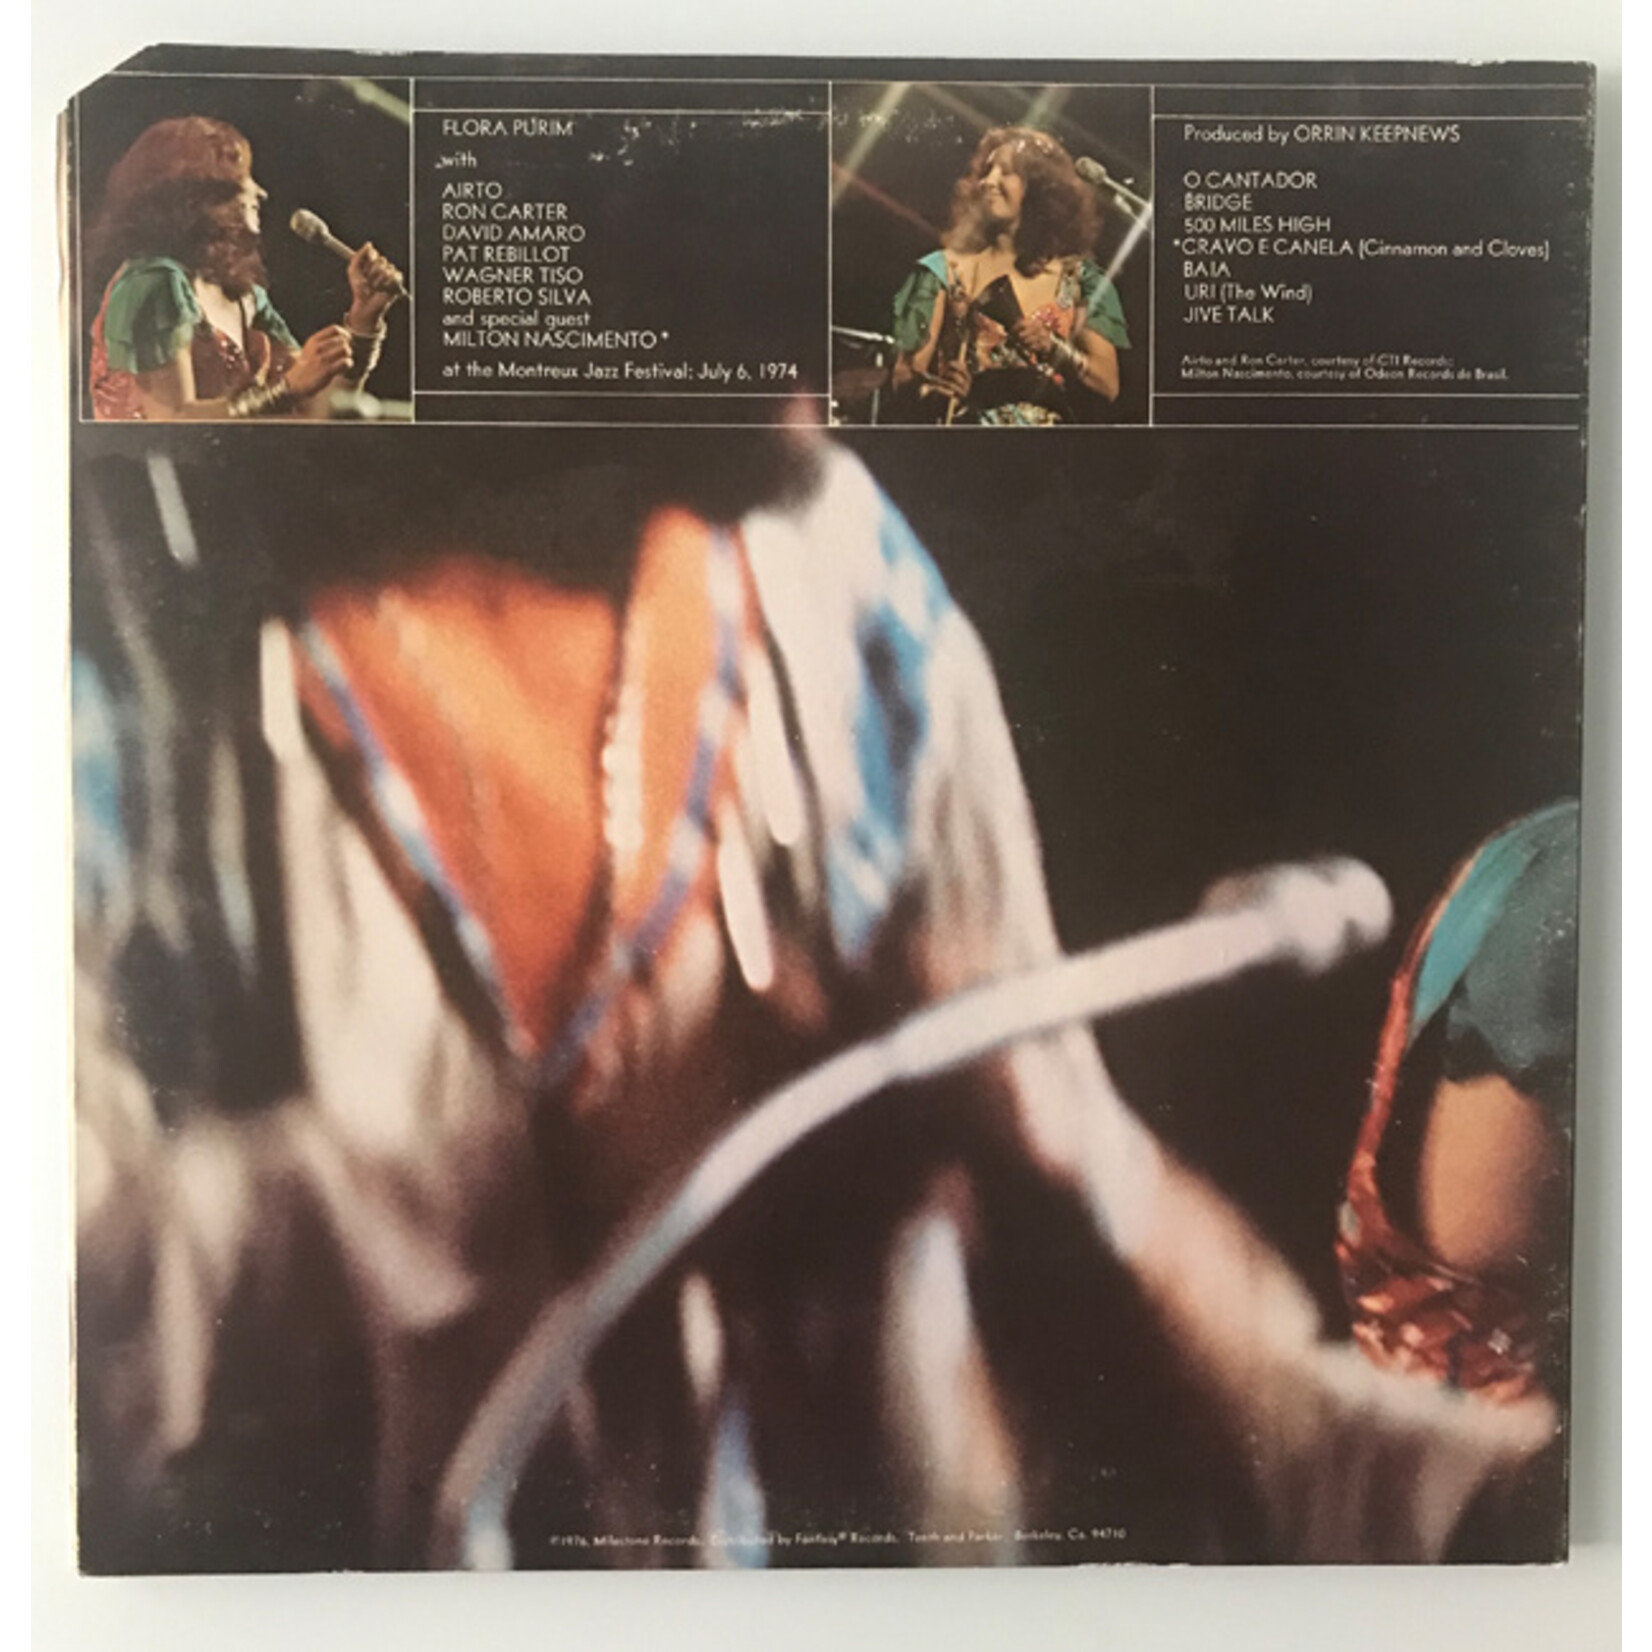 Flora Purim - 500 Miles High At Montreux - Vinyl LP (USED)